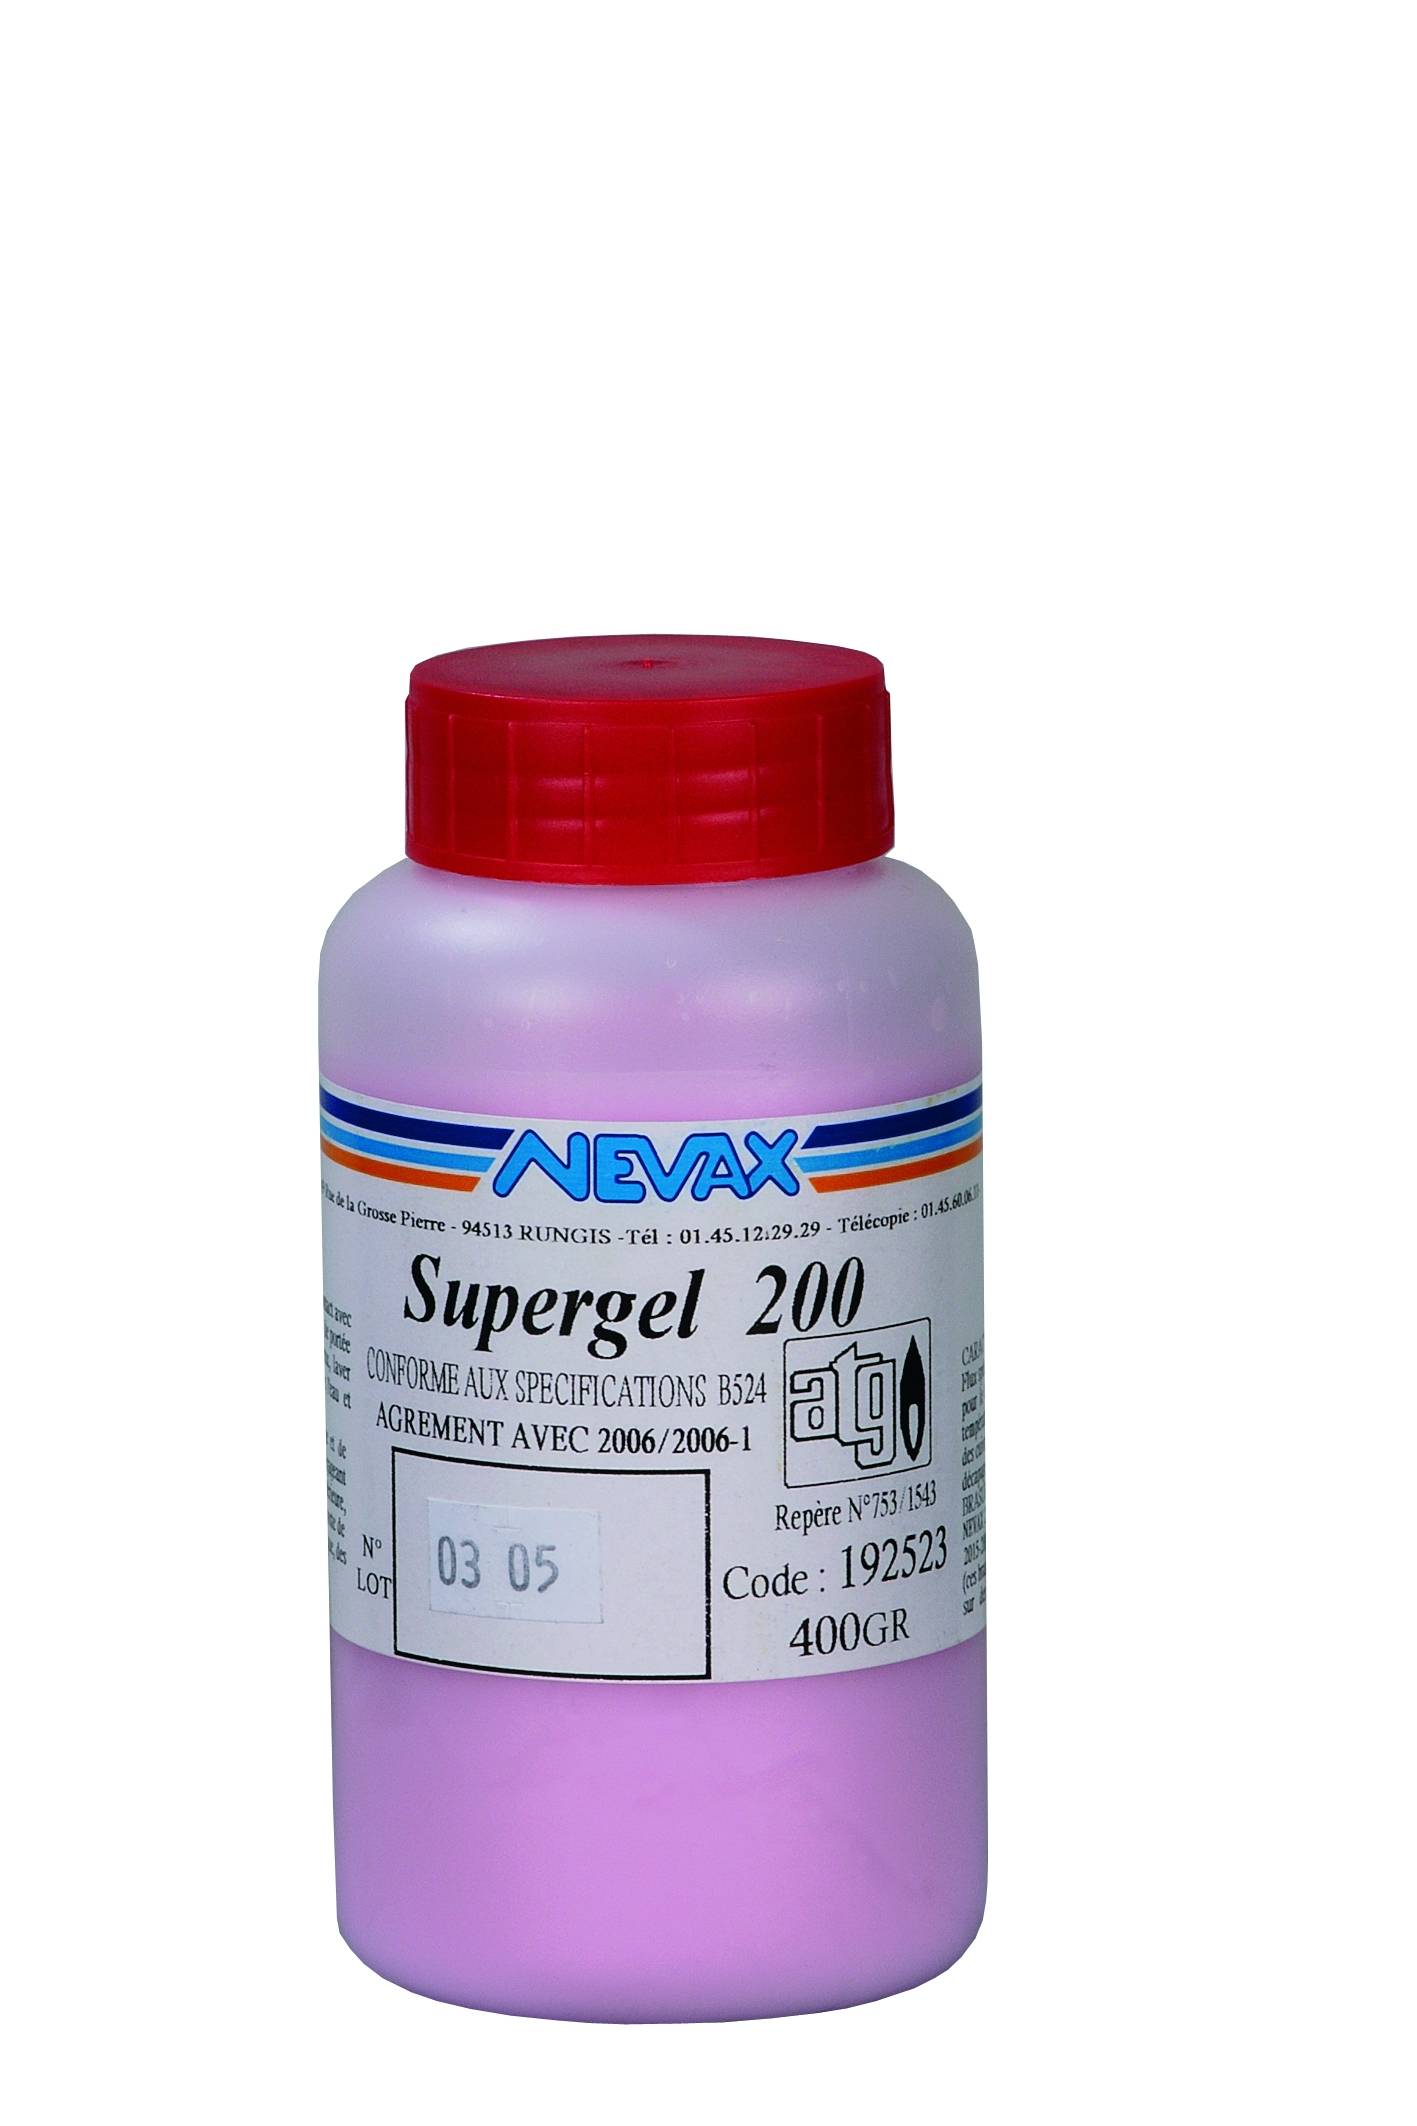 Supergel 200 gel: vasetto da 200g